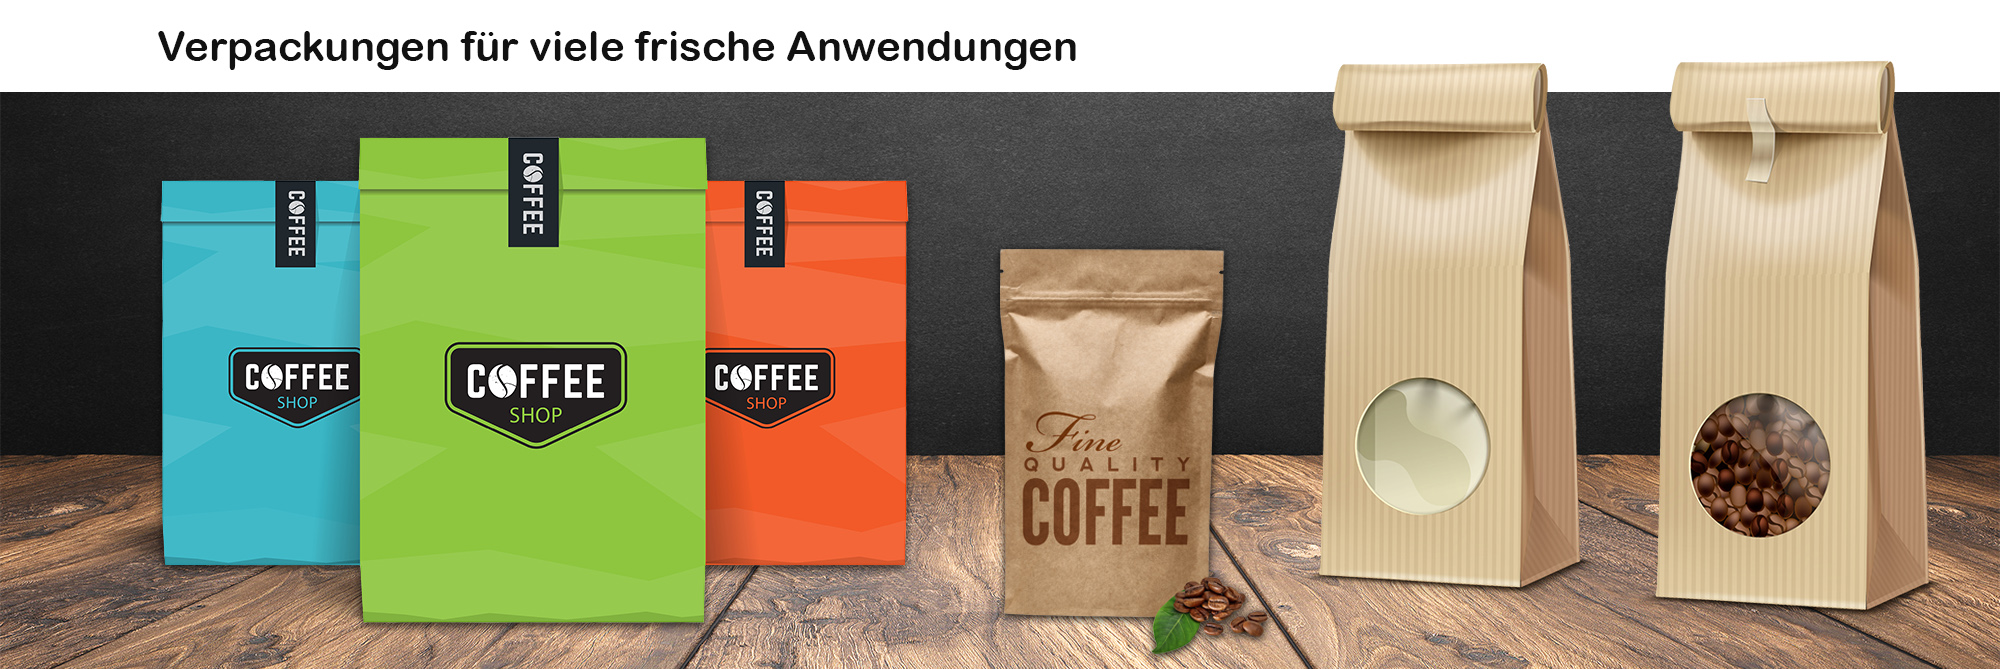 Austria Packaging Solution Cafe Verpackungen